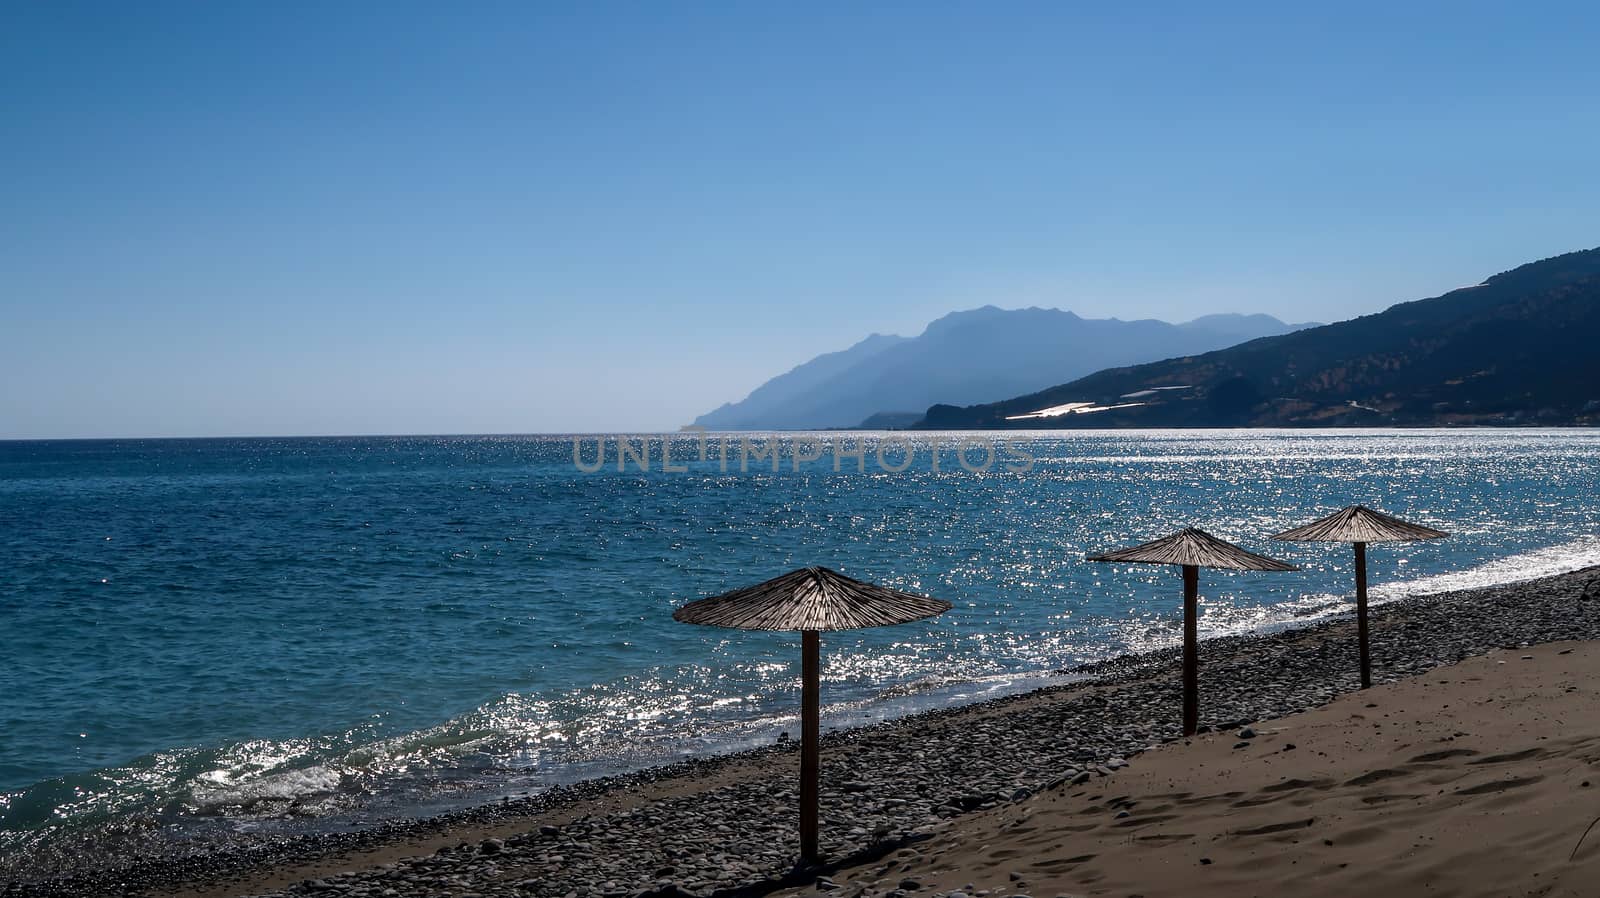 Hay umbrellas on the beach and mountains far away - Keratokampos, Crete by codrinn